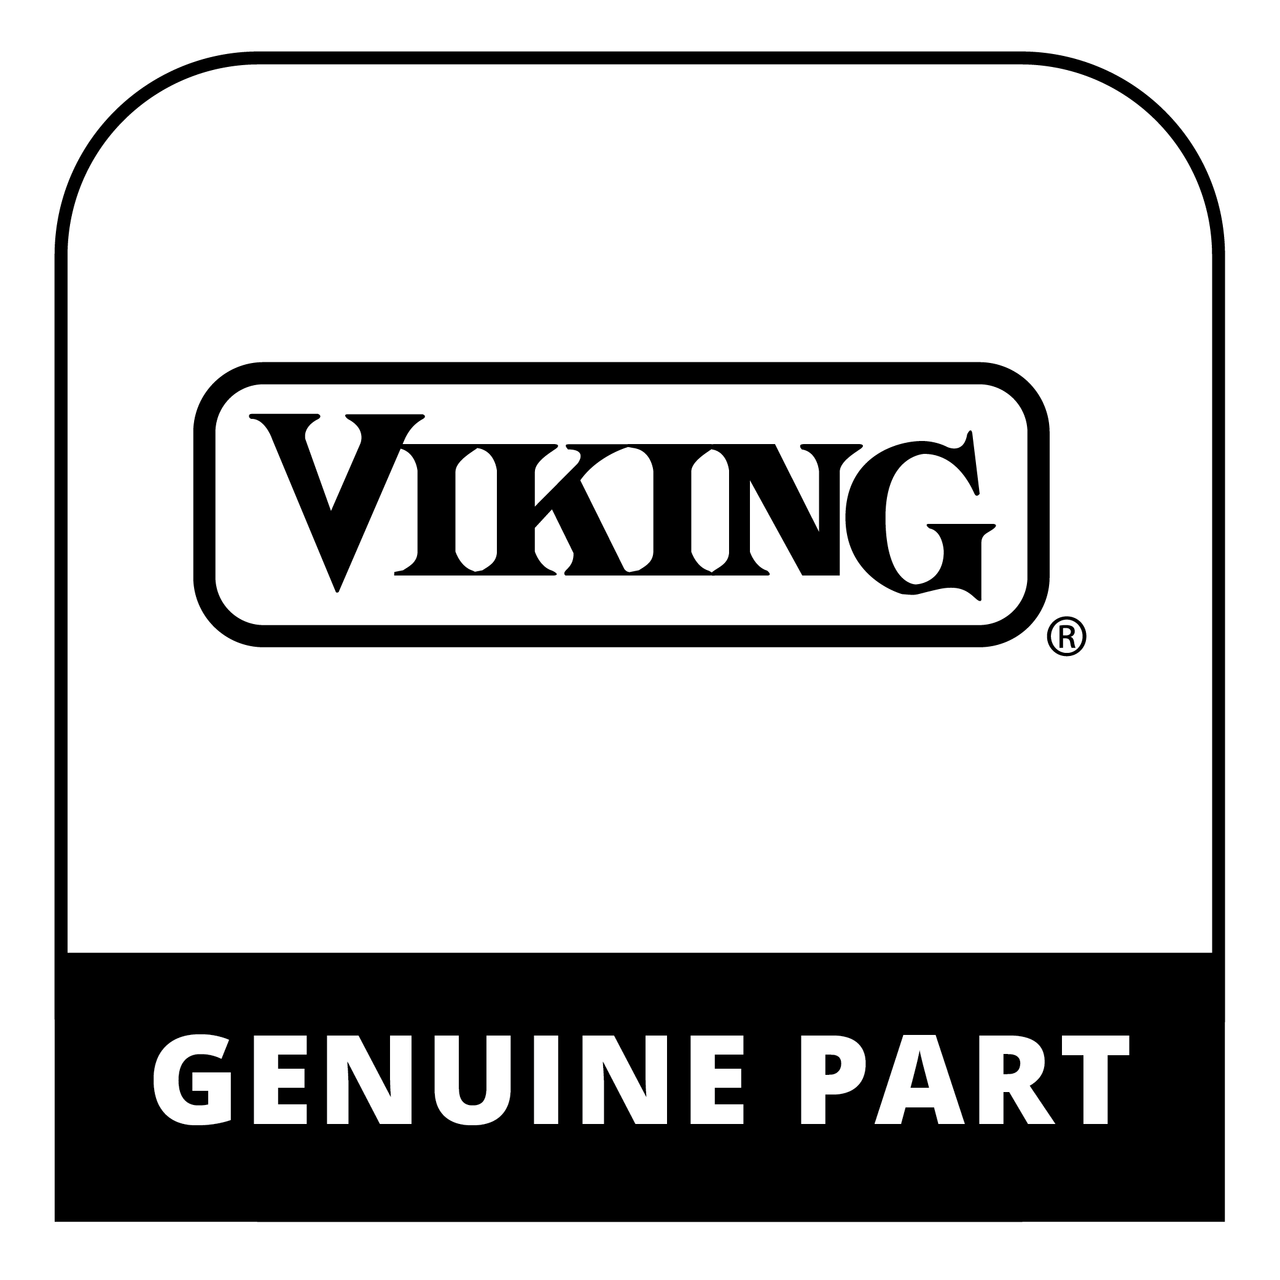 Viking 066587-000 - CVR, TOP, LH, ASSY, COLUMN 7 SERIES - Genuine Viking Part